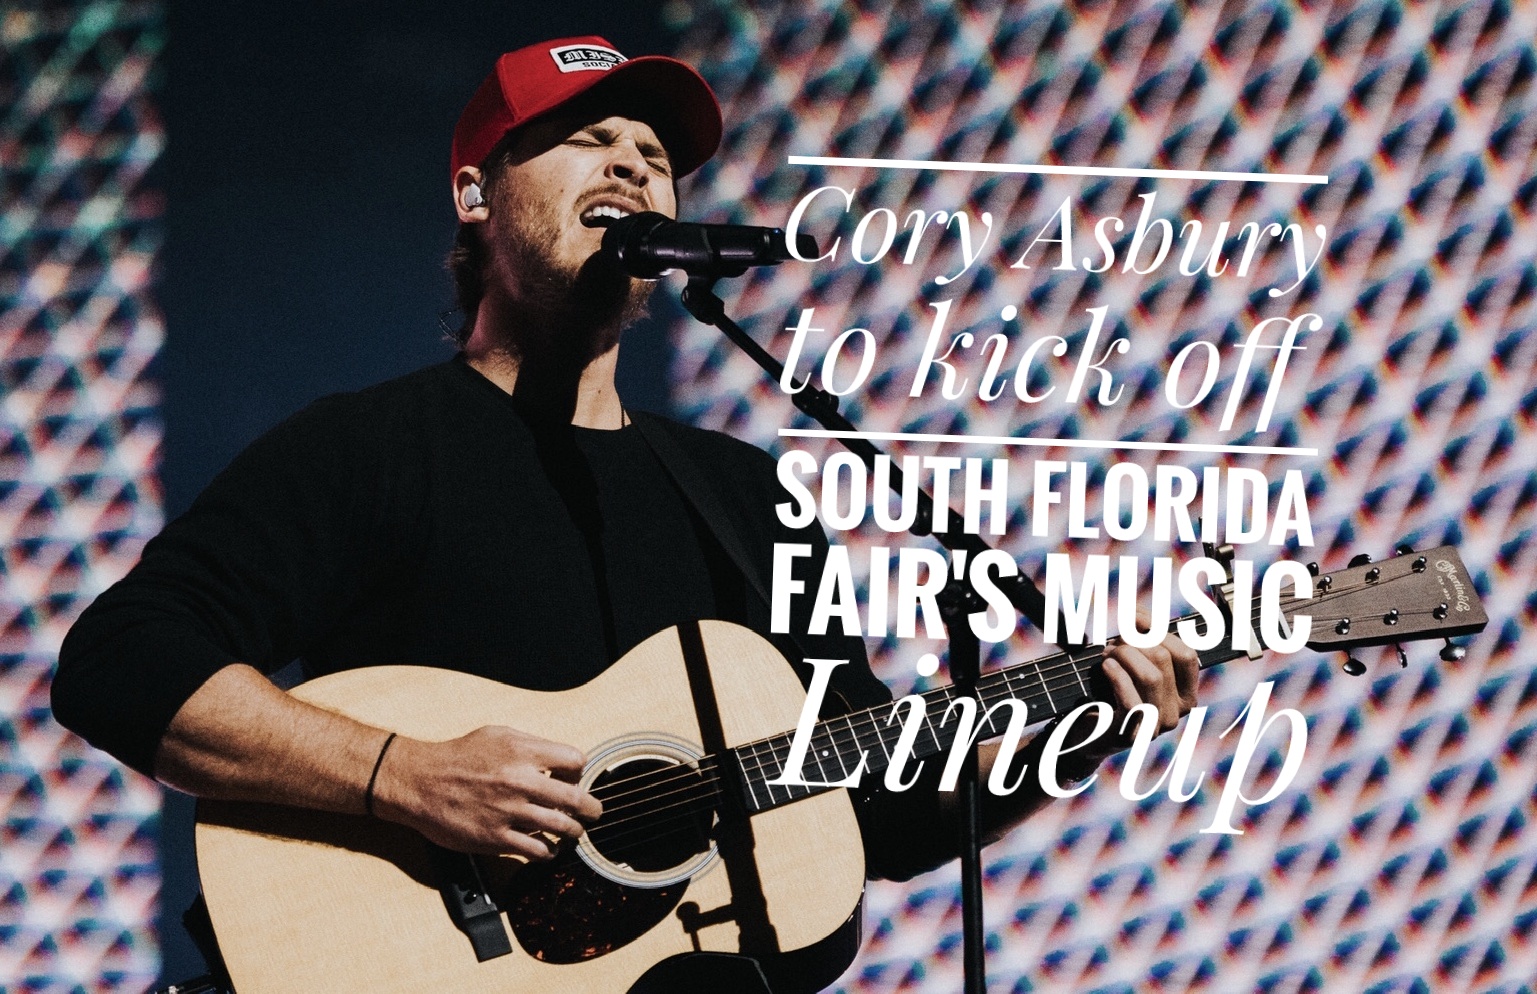 Cory Asbury to kick off South Florida Fair’s music lineup